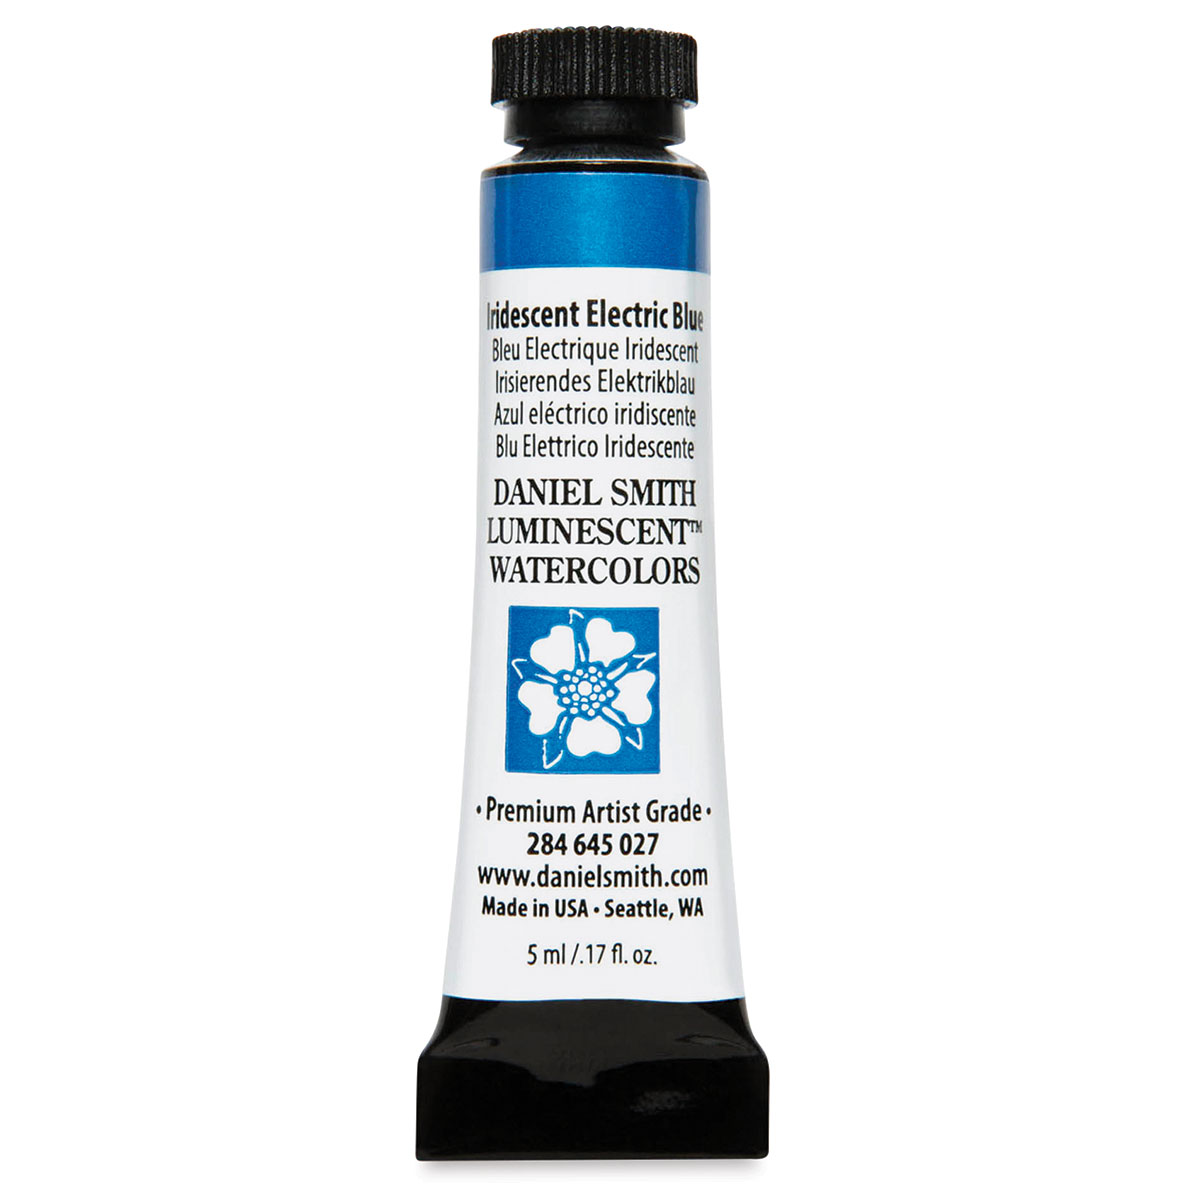 Daniel Smith Luminescent Watercolor - Iridescent Electric Blue, 5 ml, Tube